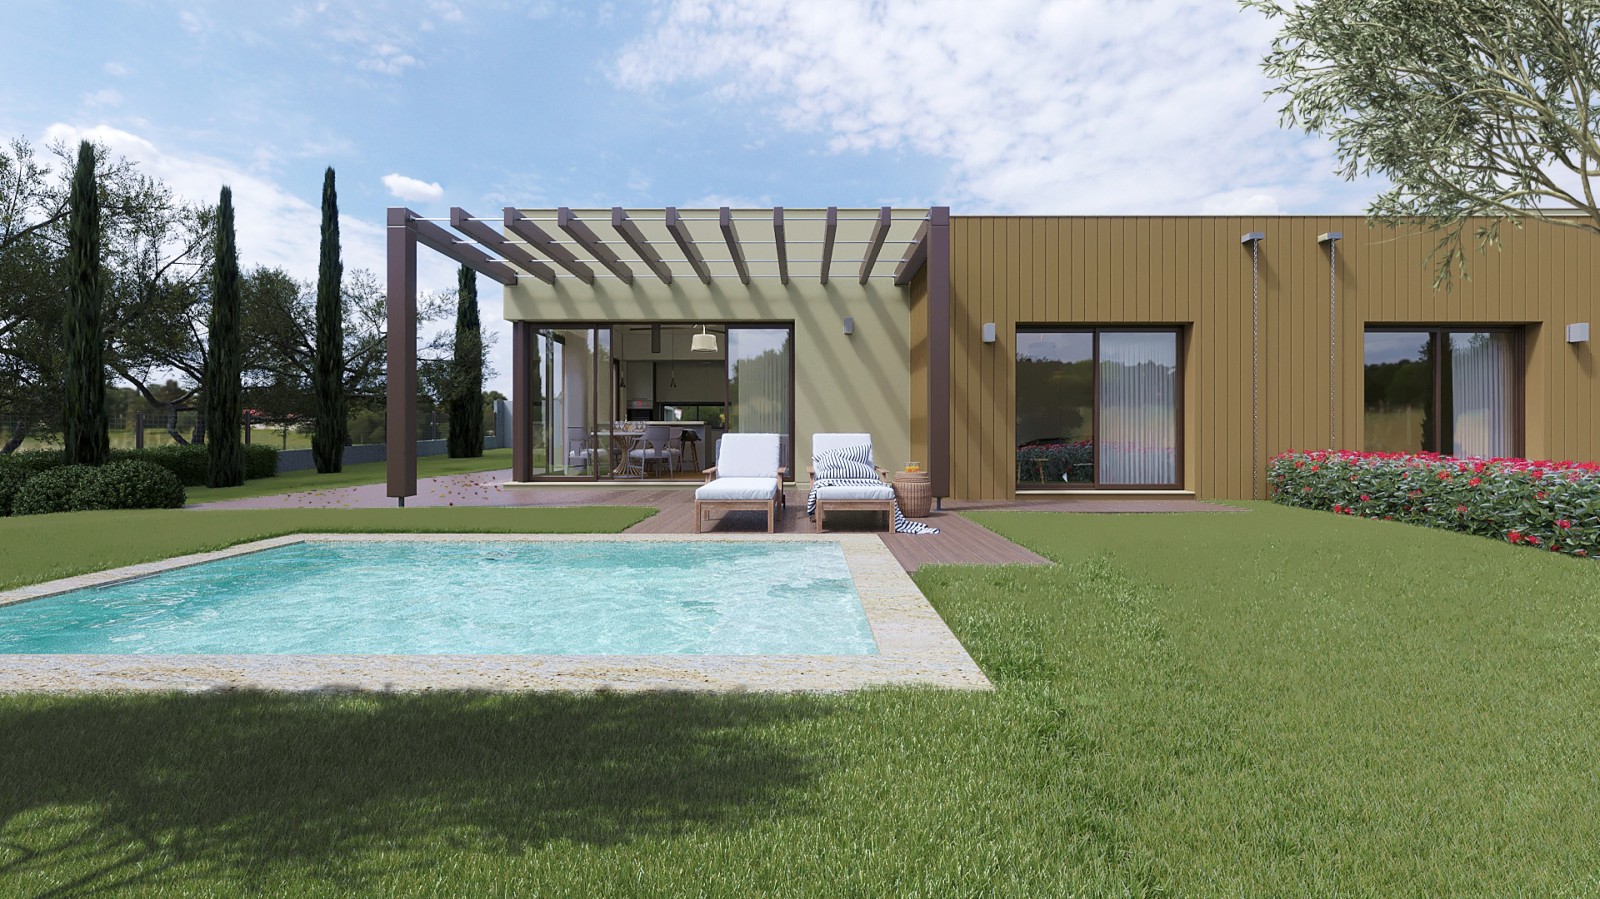 2 bedroom semi-detached villa with swimming pool for sale in Golf resort, Algarve_218825